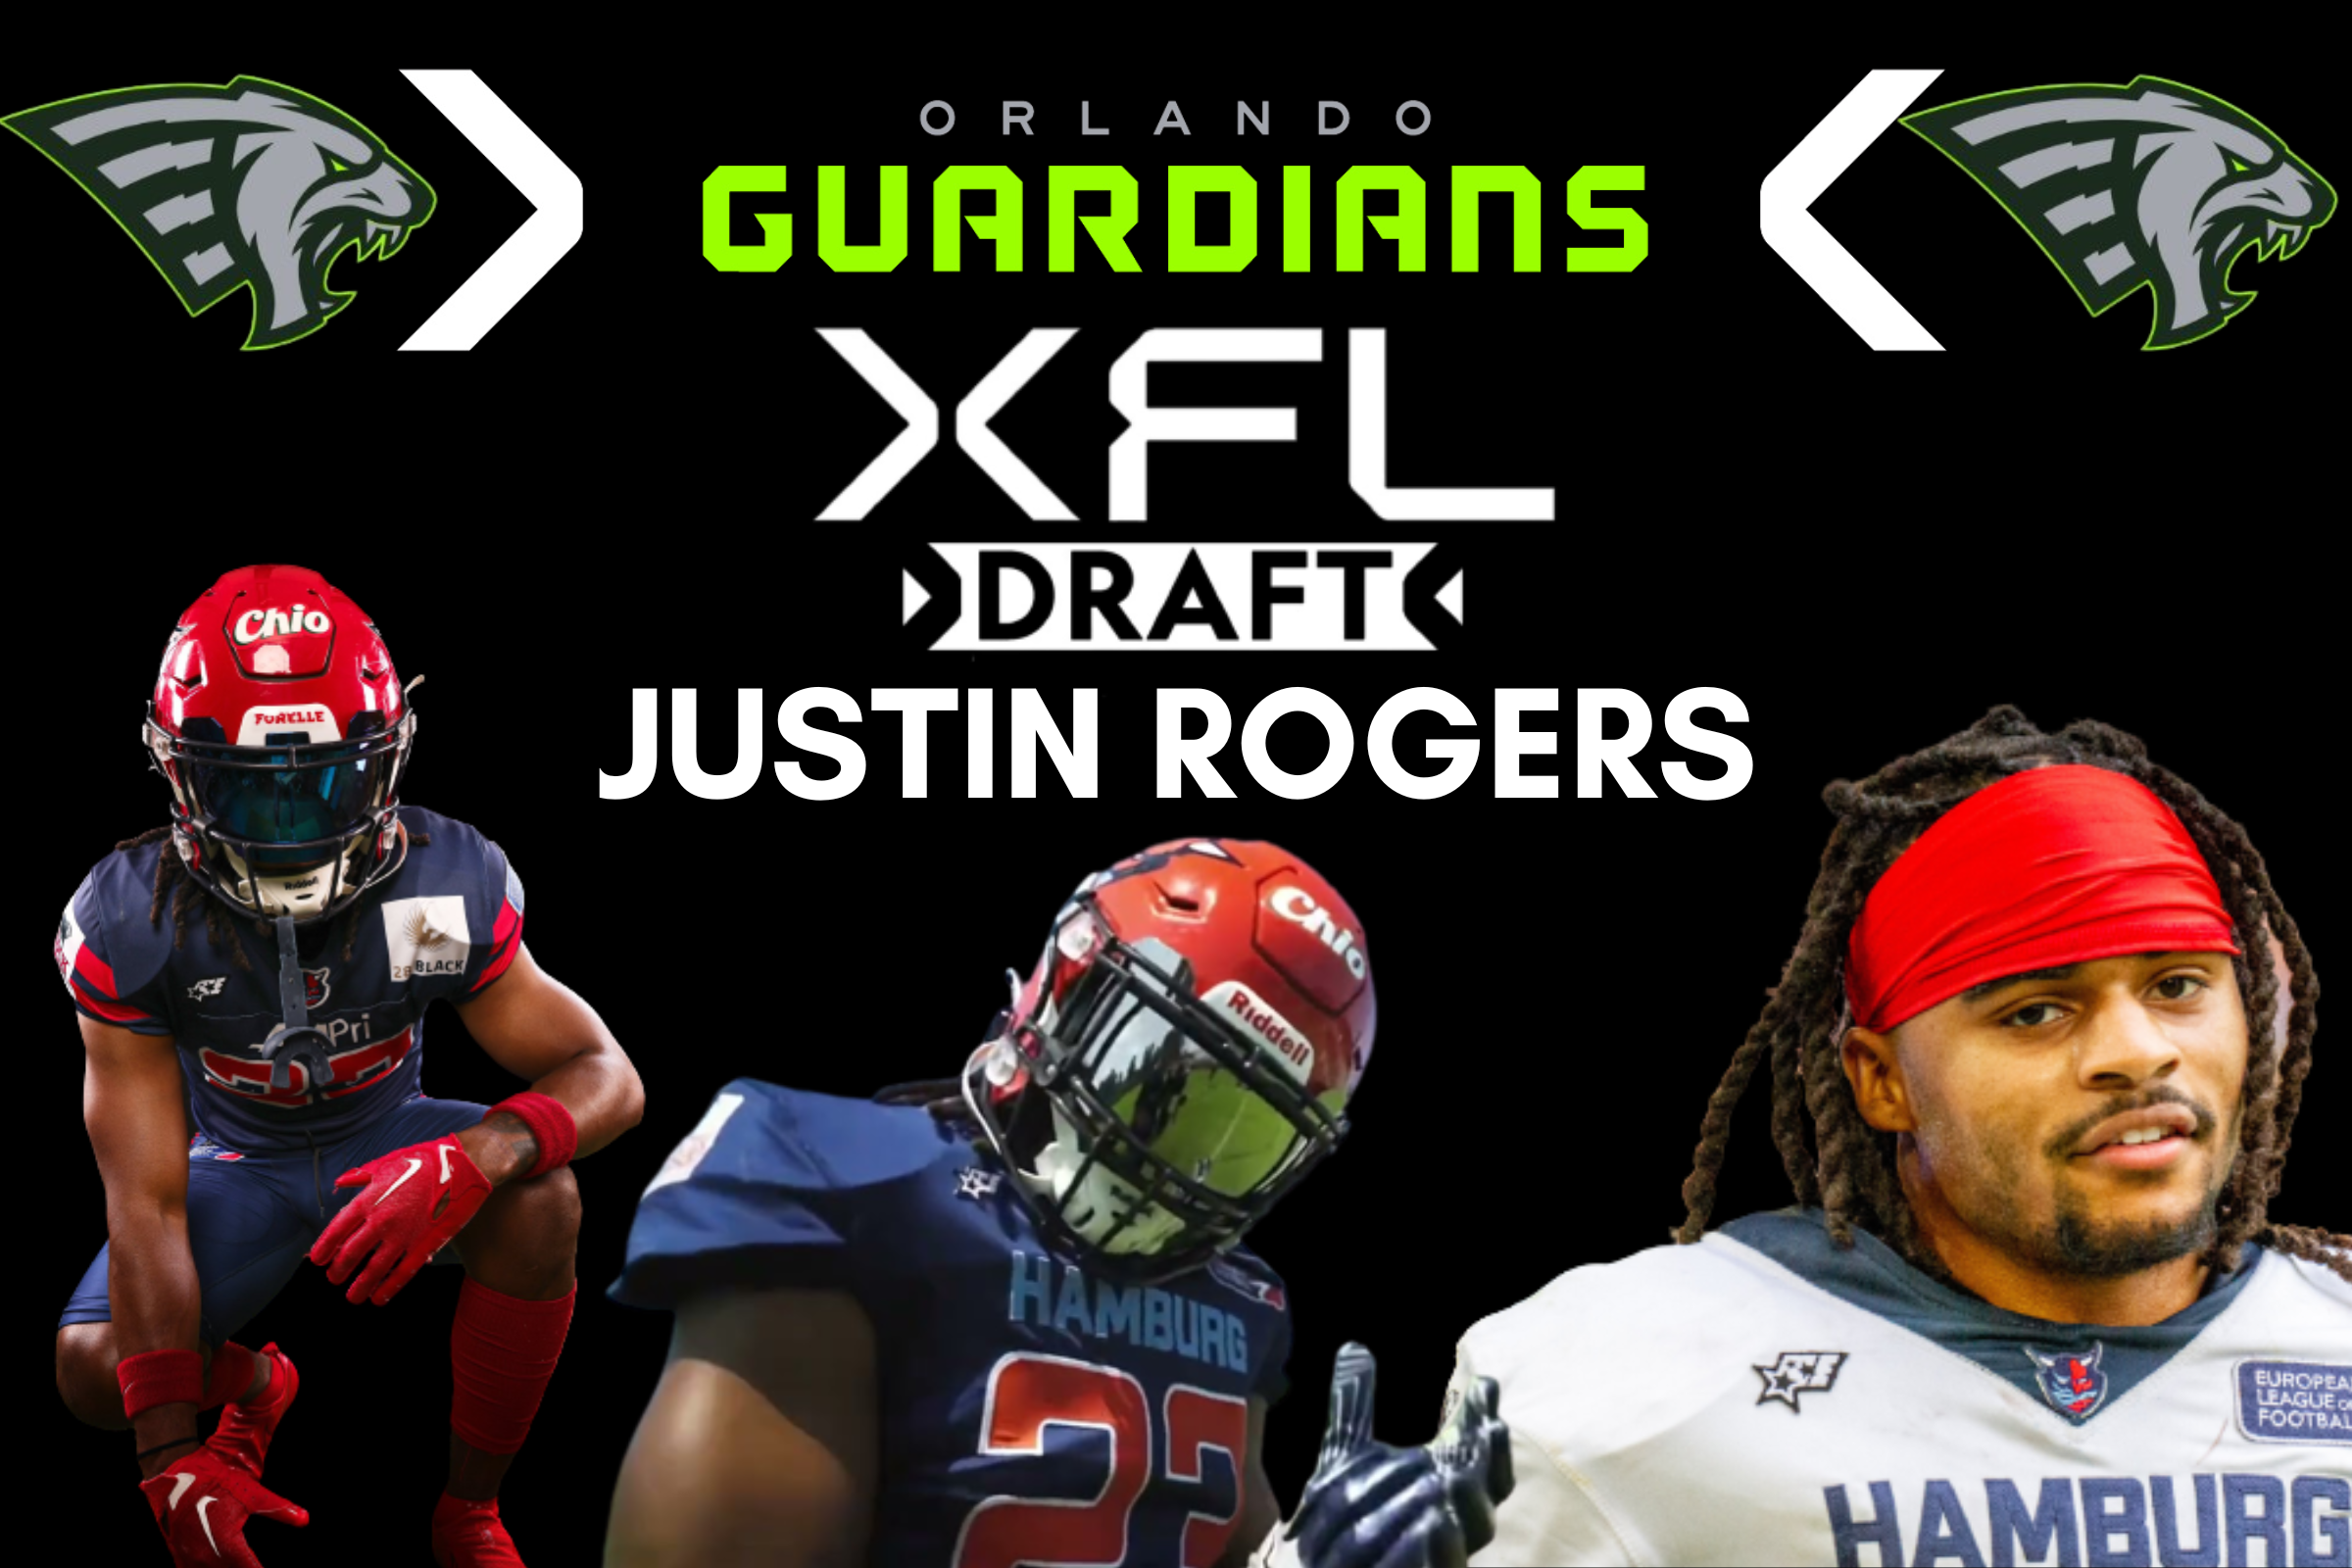 XFL Draft: Orlando Guardians Select ELF All-Star DB Justin Rogers